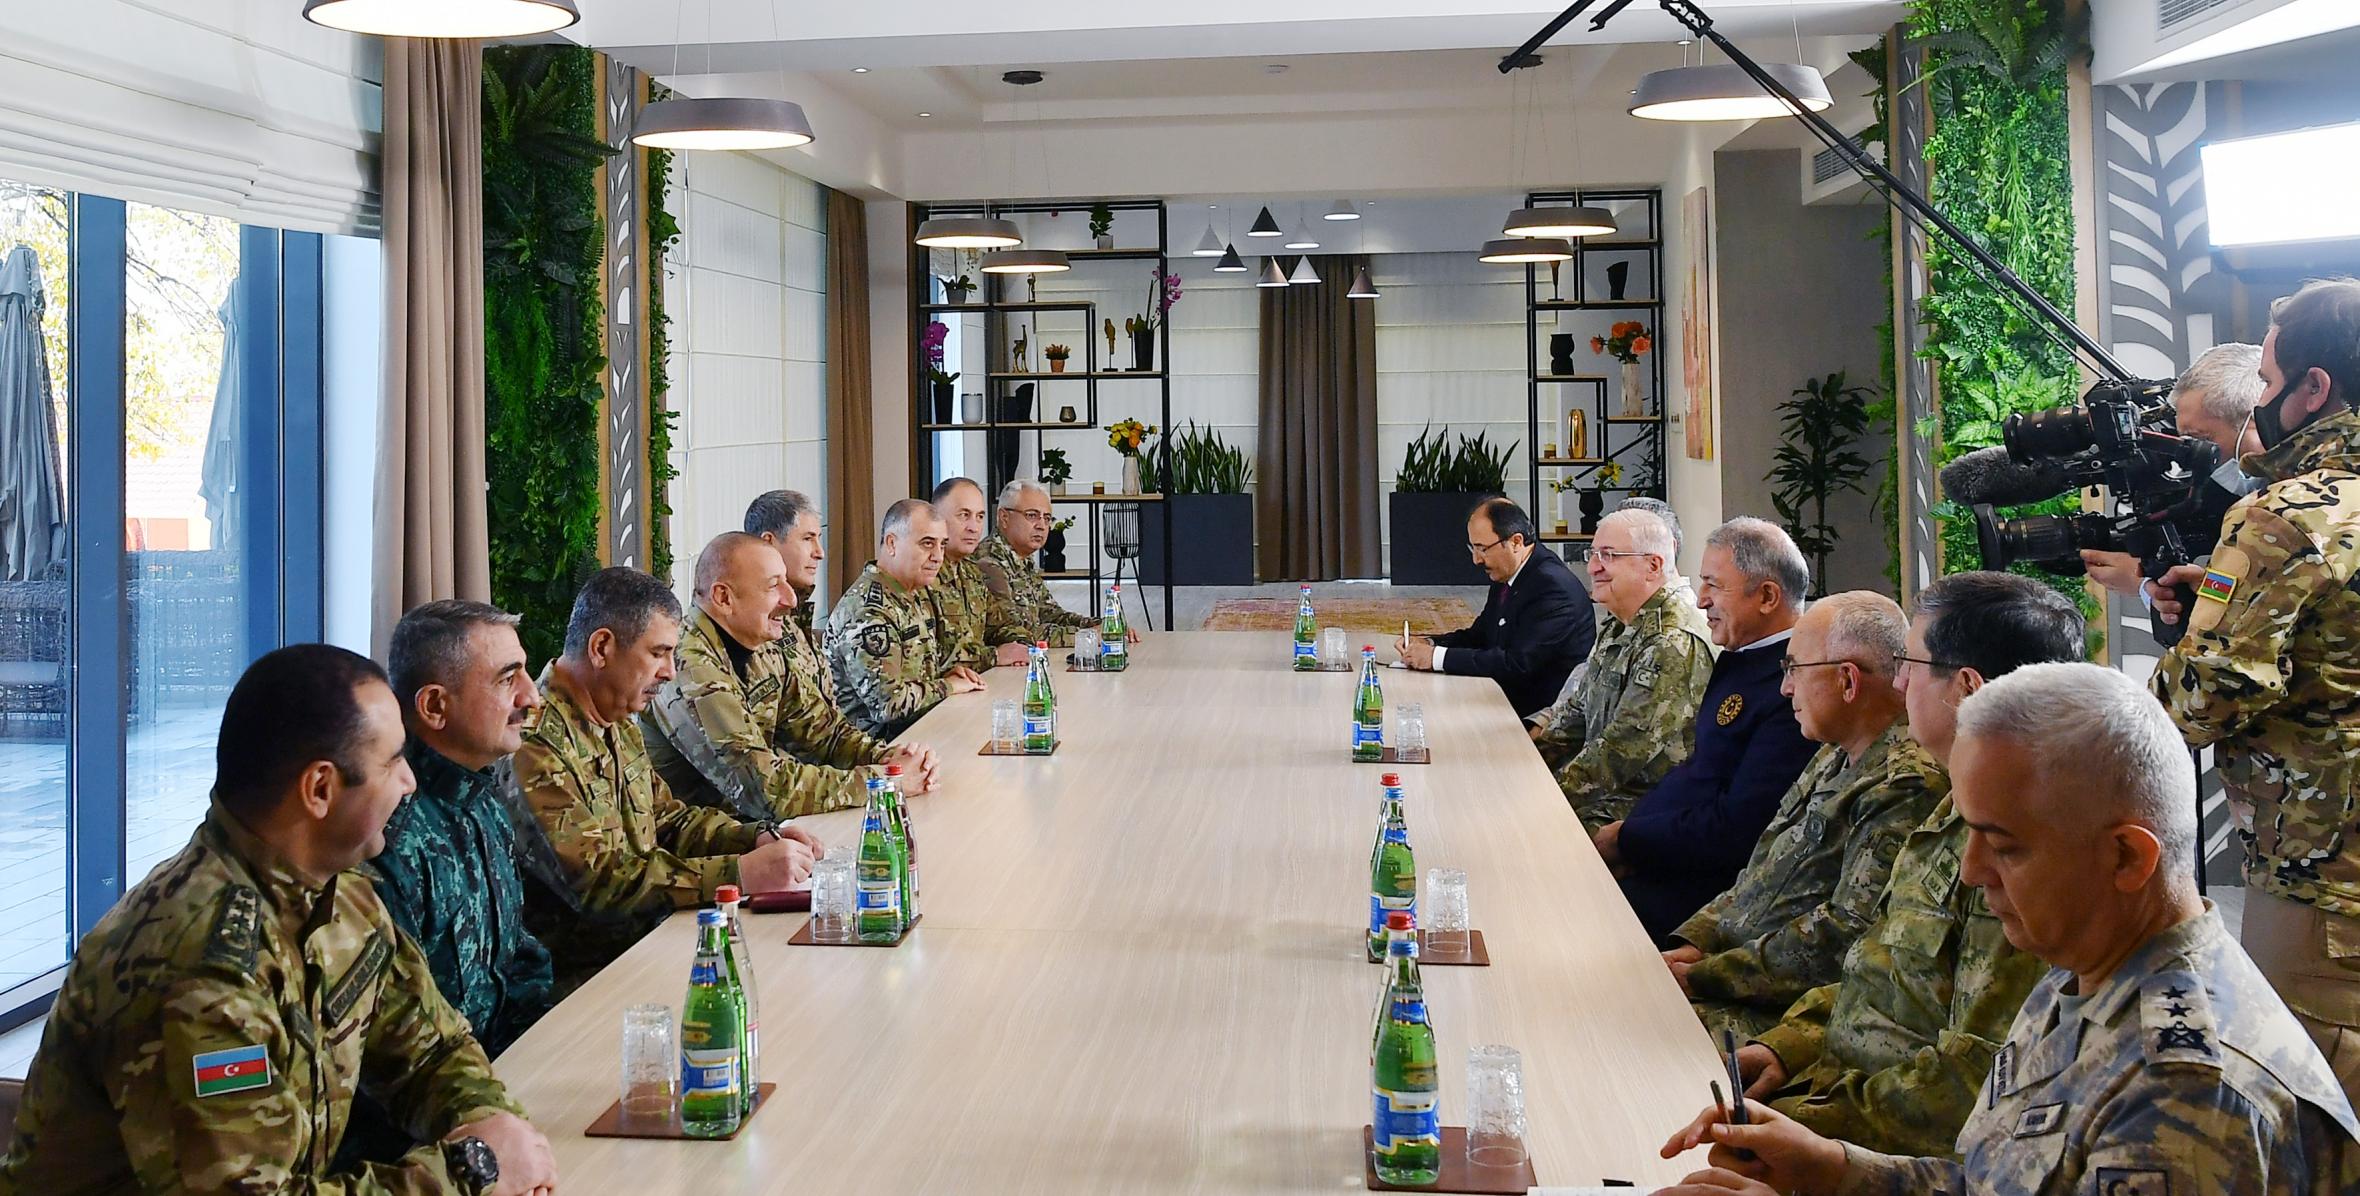 Ilham Aliyev received delegation led by Turkish Minister of National Defense Hulusi Akar